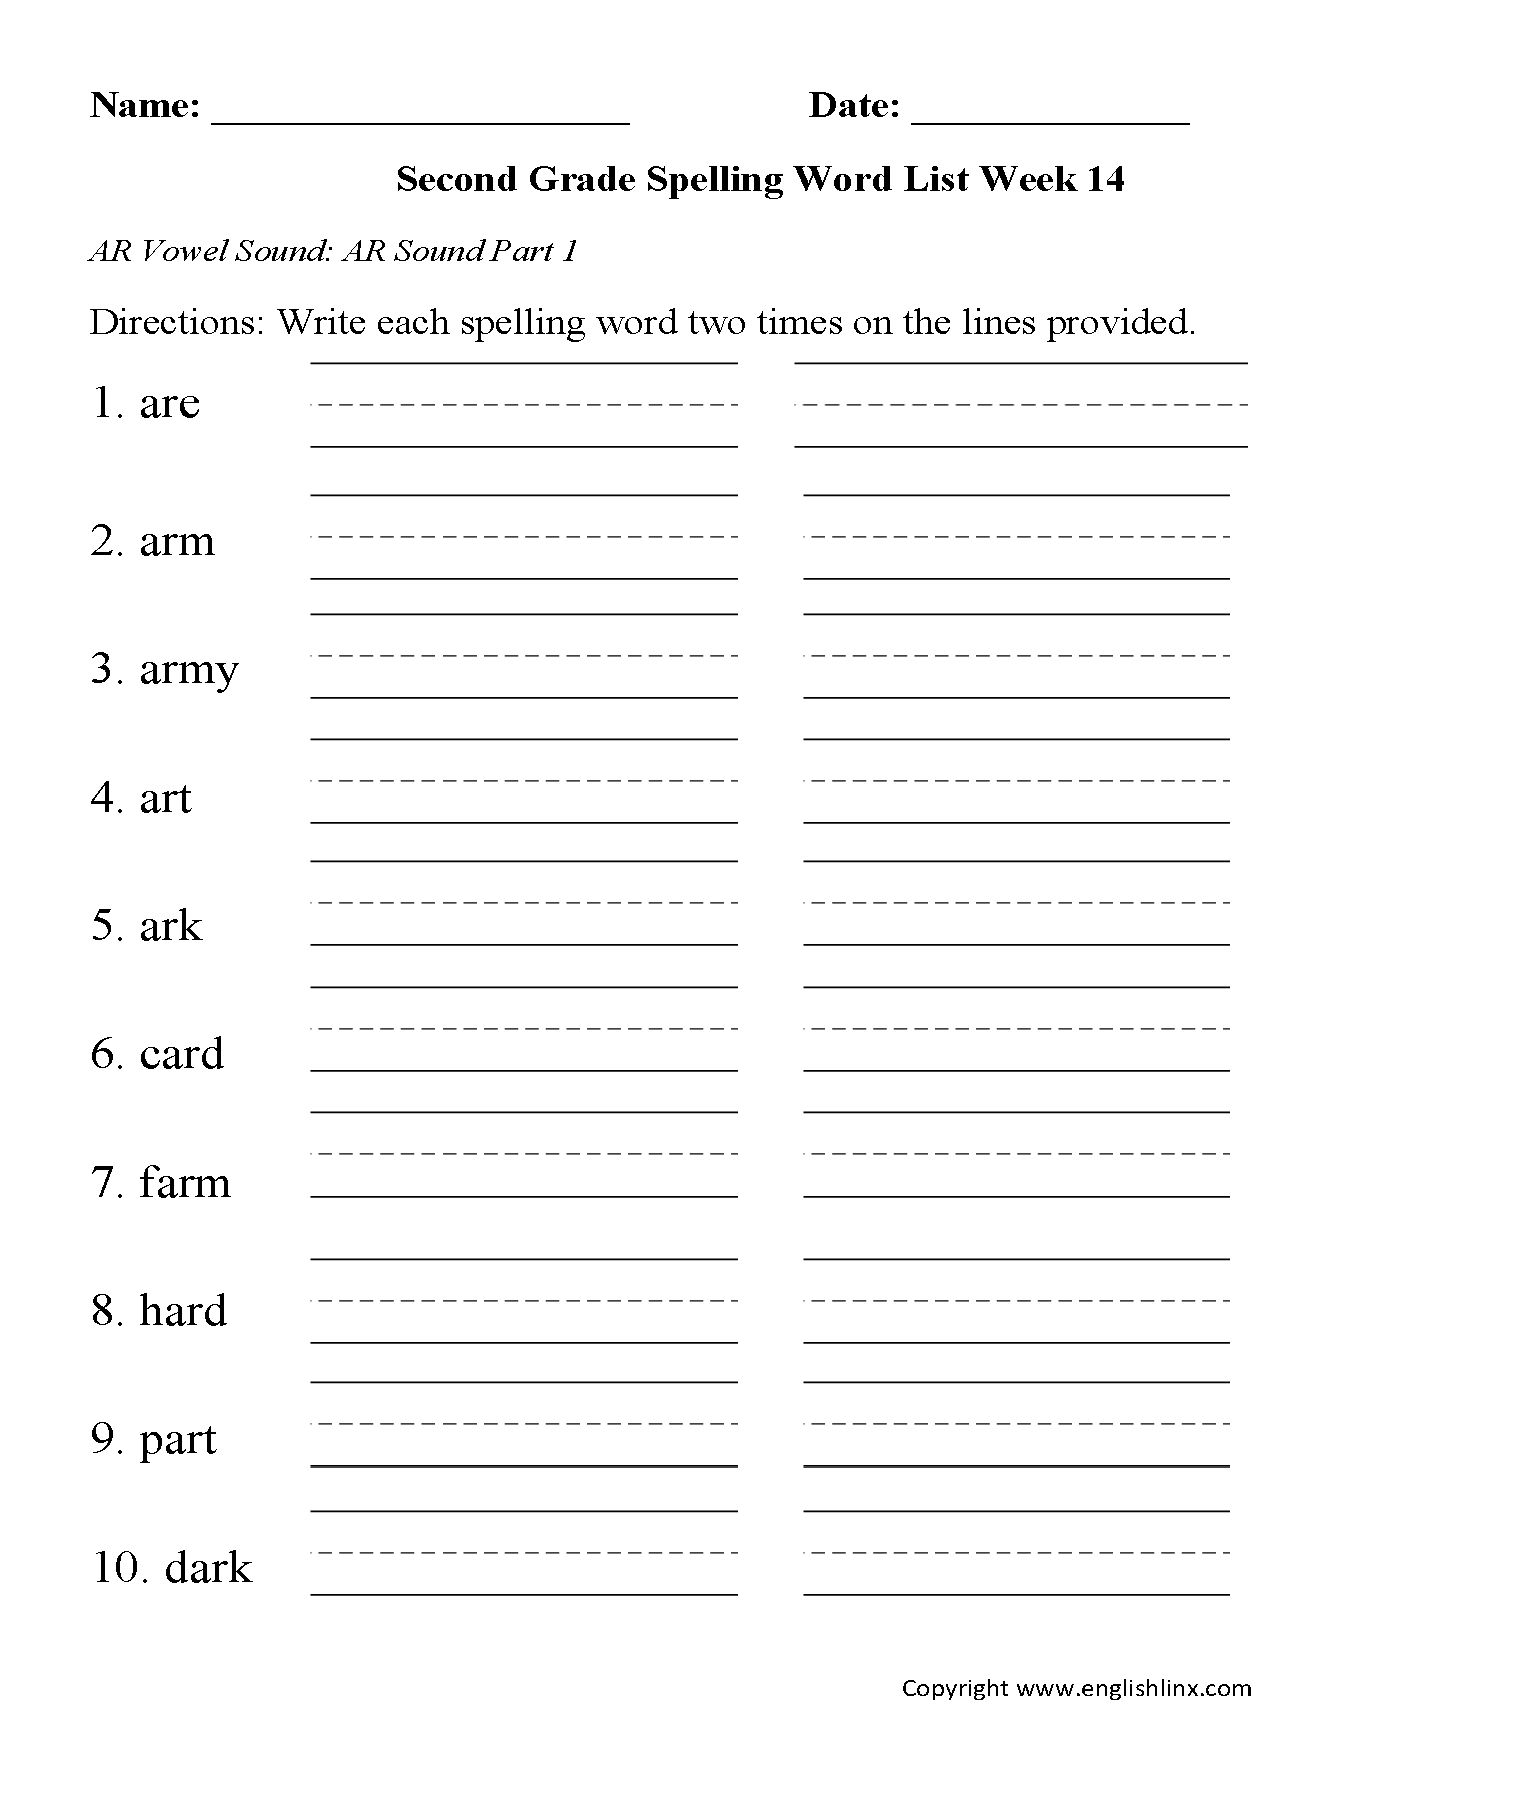 Spelling Worksheets | Second Grade Spelling Words Worksheets